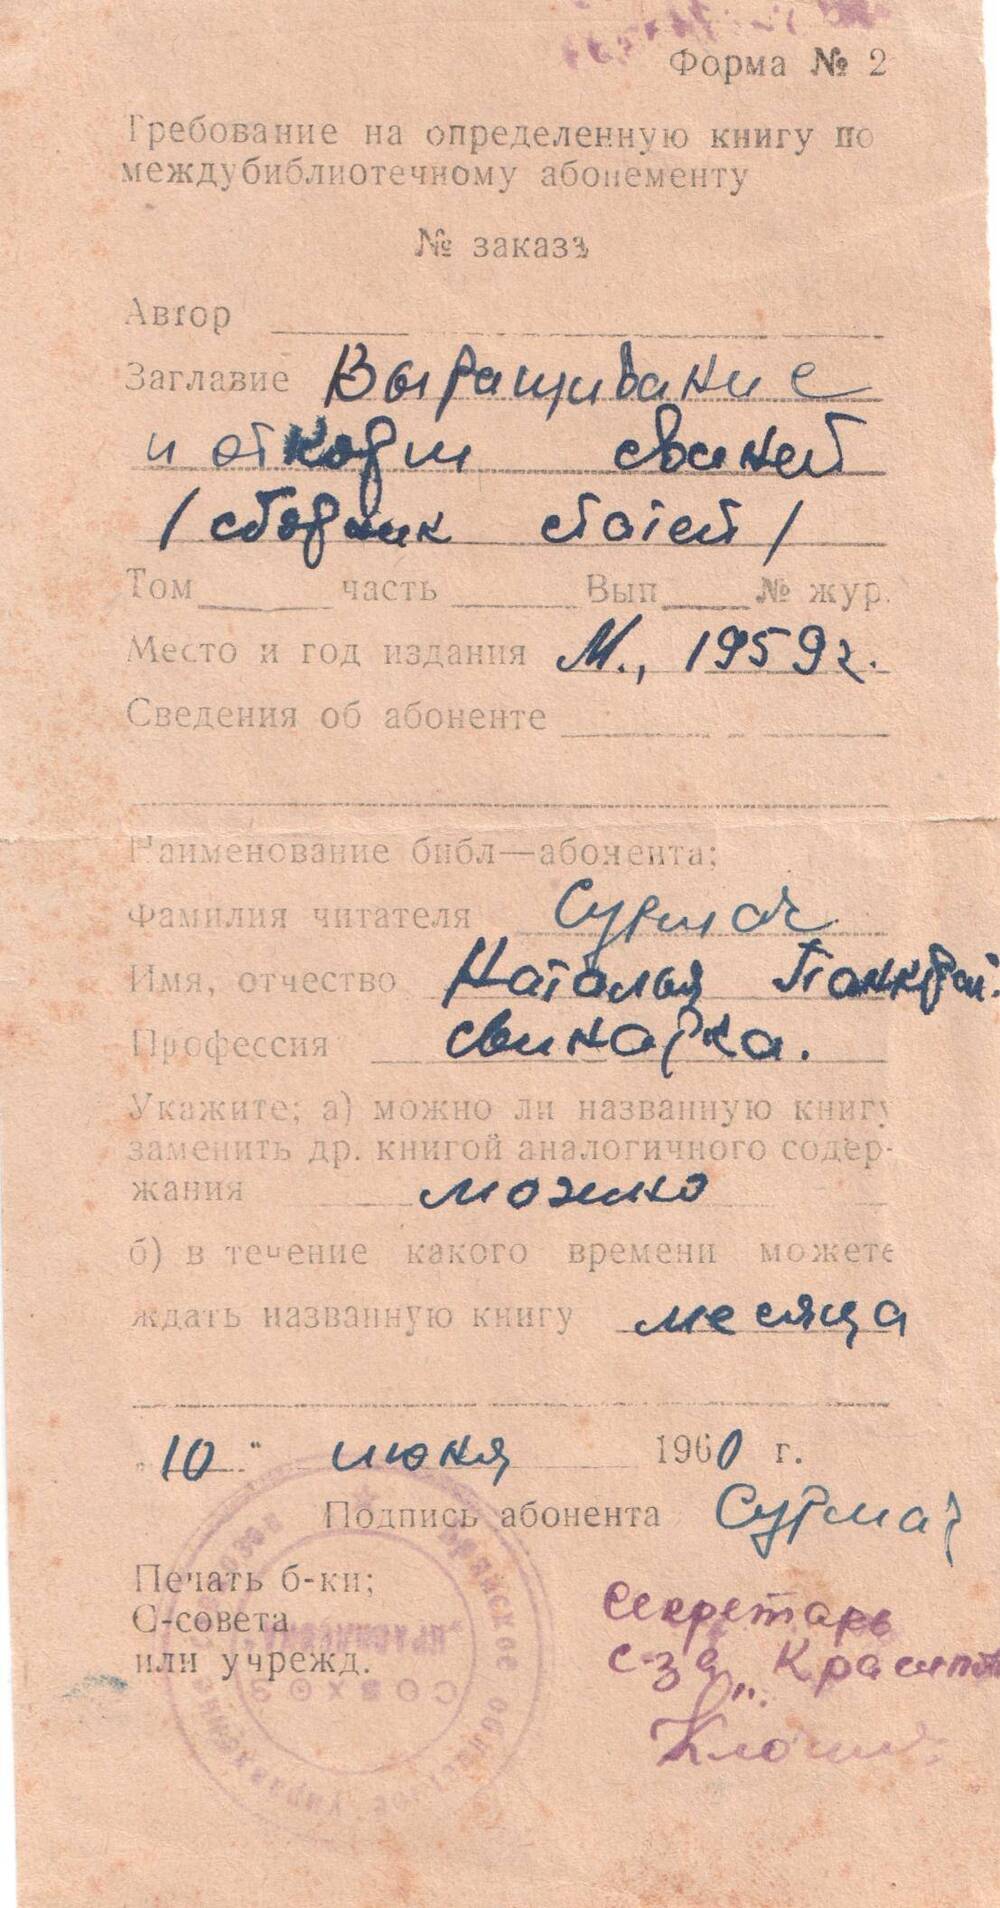 Требование на книгу из Брянской областной библиотеки от 10.06.1960 г. Н.П. Сурмач